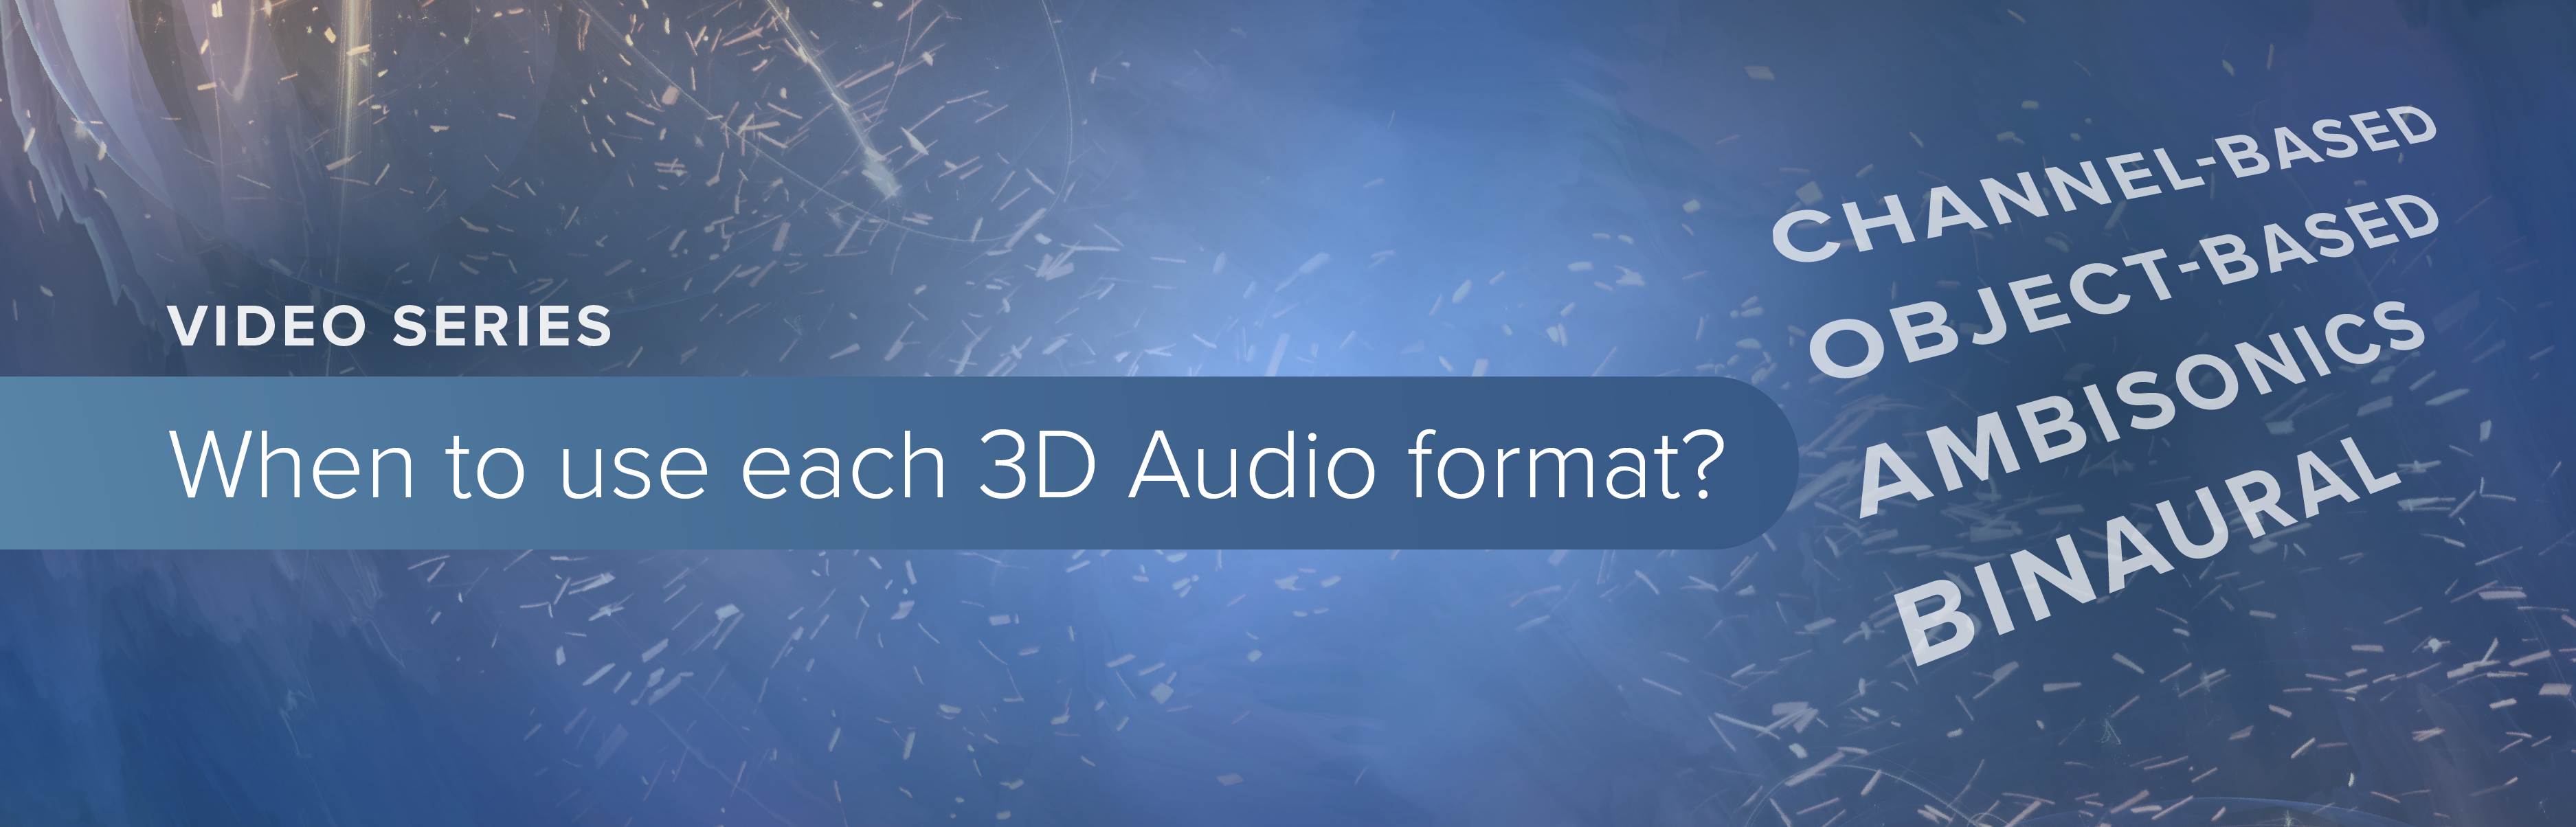 banner-3d-audio-formats